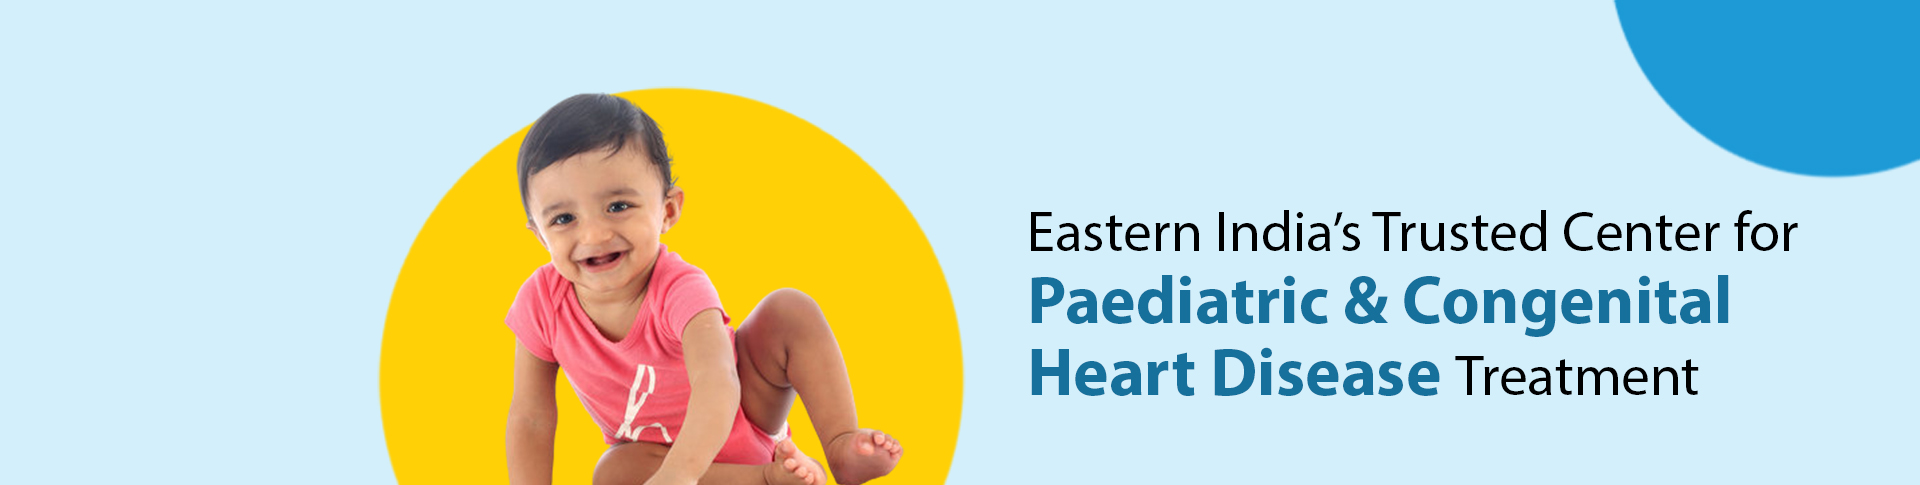 Paediatric & Congenital Heart Disease